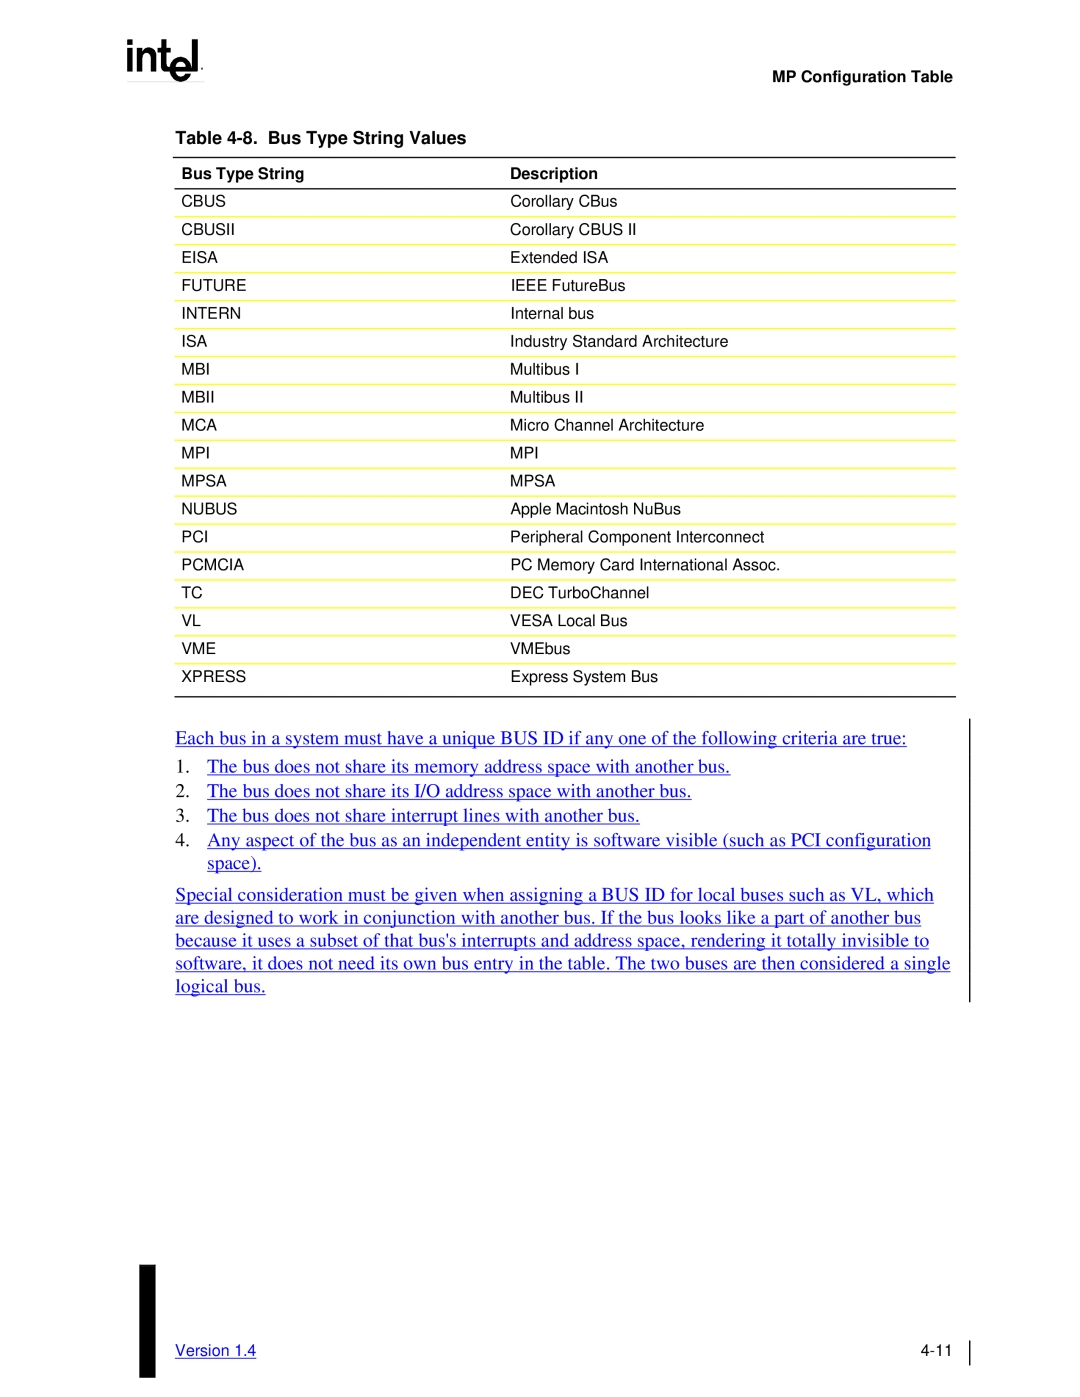 Intel MultiProcessor manual 8.Bus Type String Values, MP Configuration Table, Description 